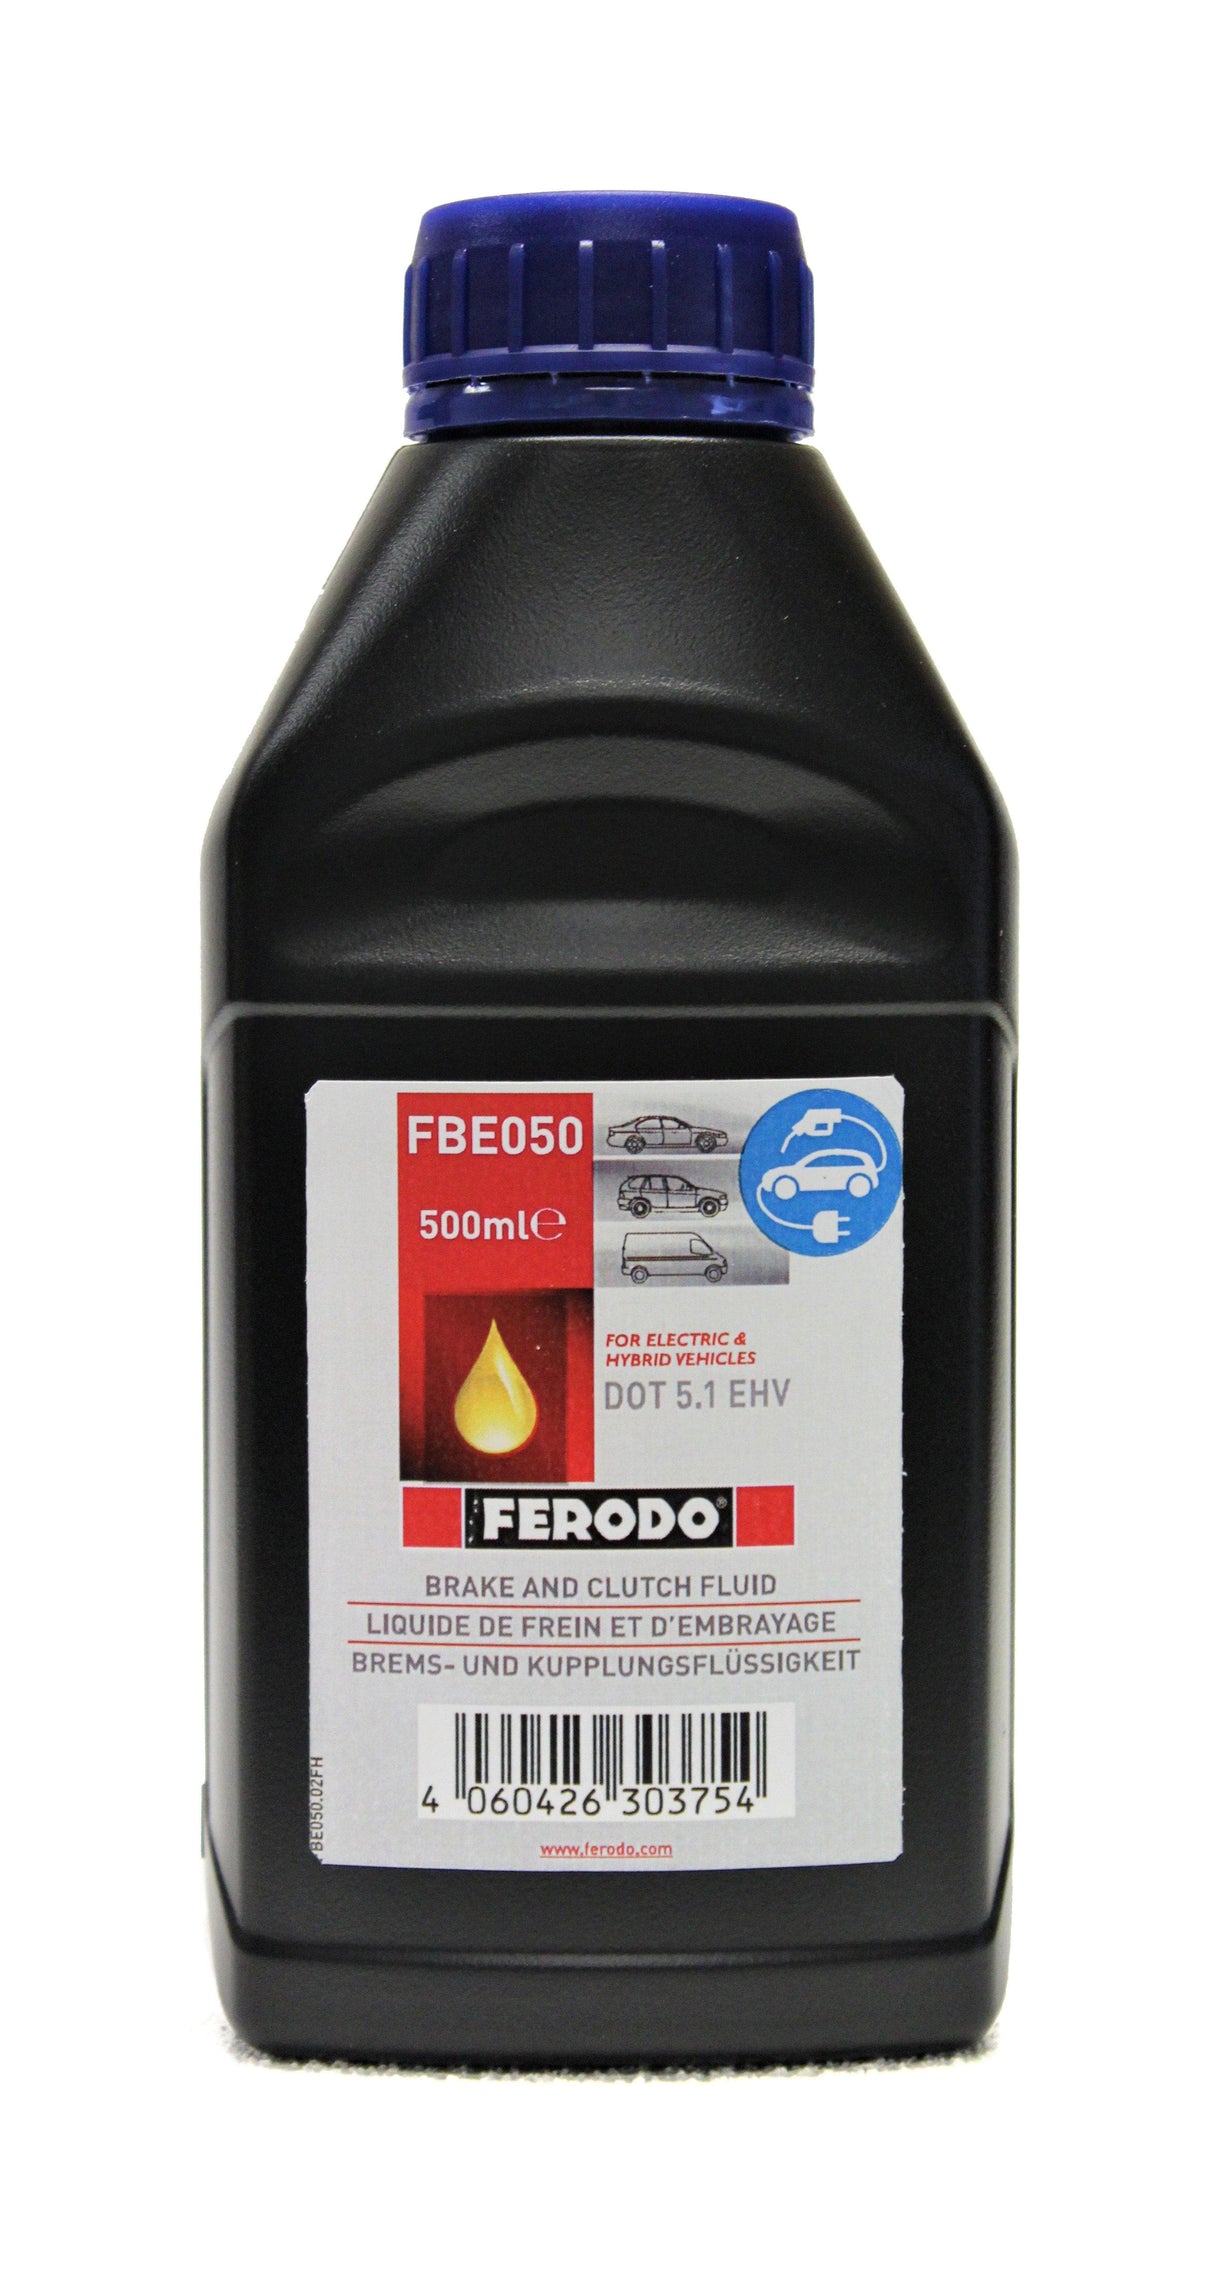 Ferodo Ferodo DOT 5.1 for Ebikes 0.5L